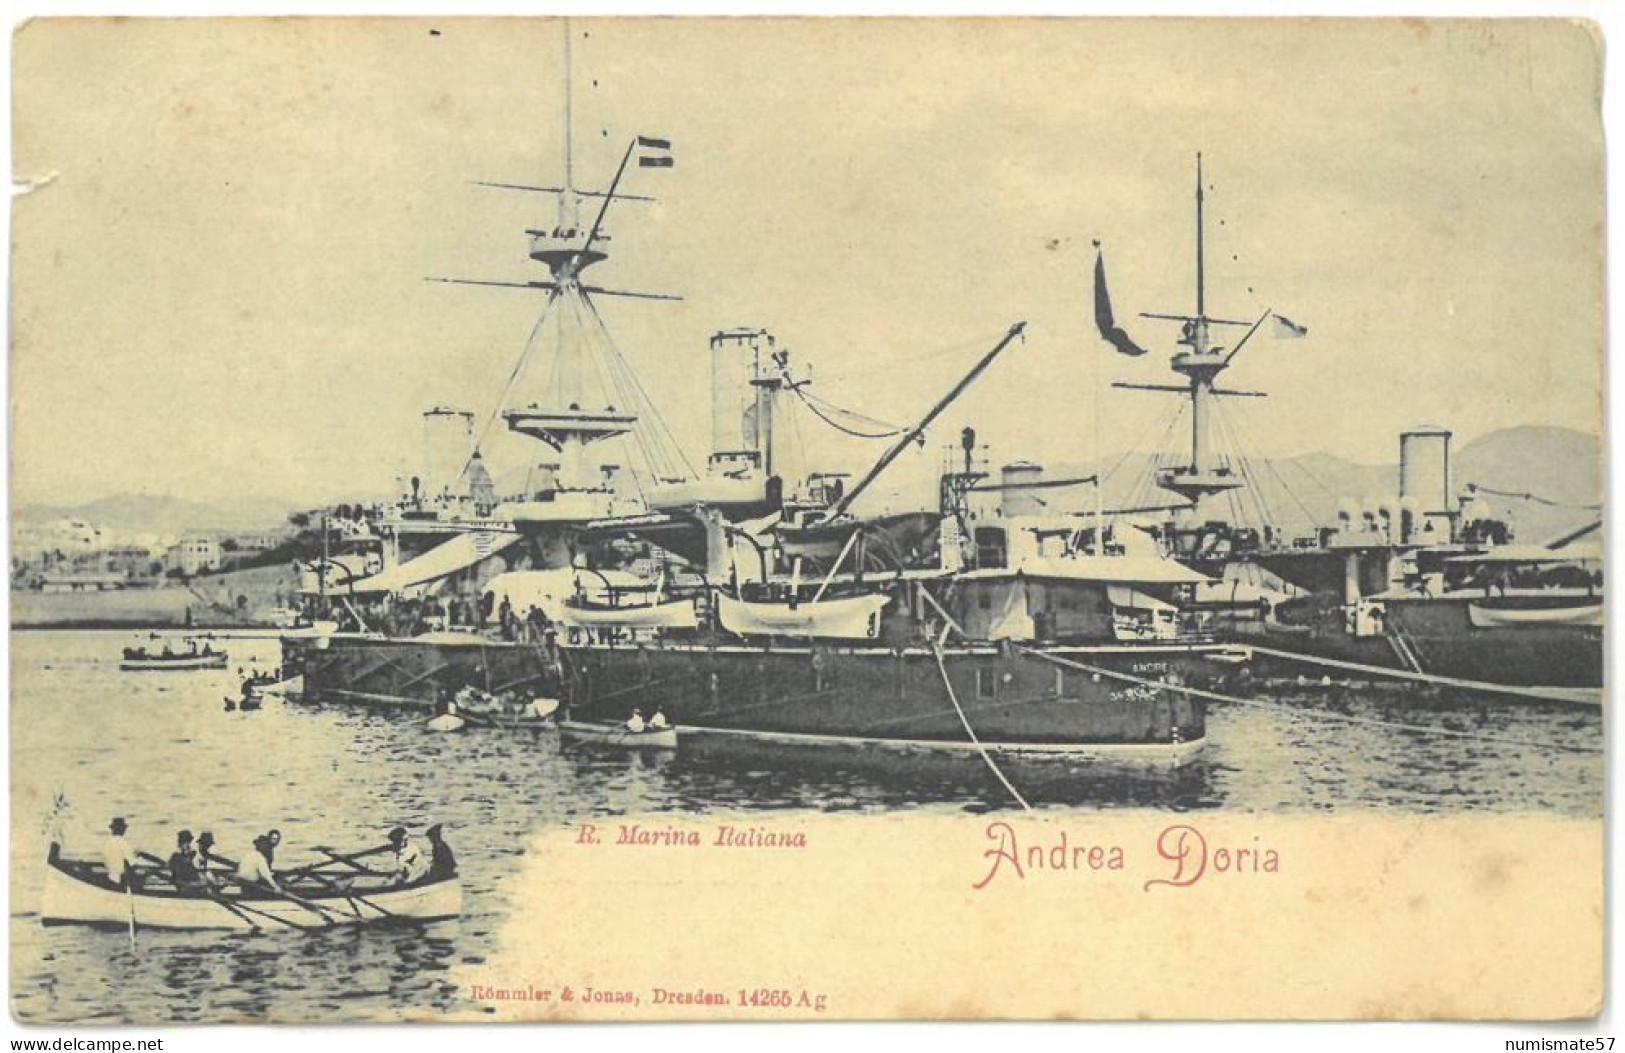 CPA ANDREA DORIA - R. Marina Italiana - Ed. Römmler & Jonas , Dresden N°14265 Ag - Guerre